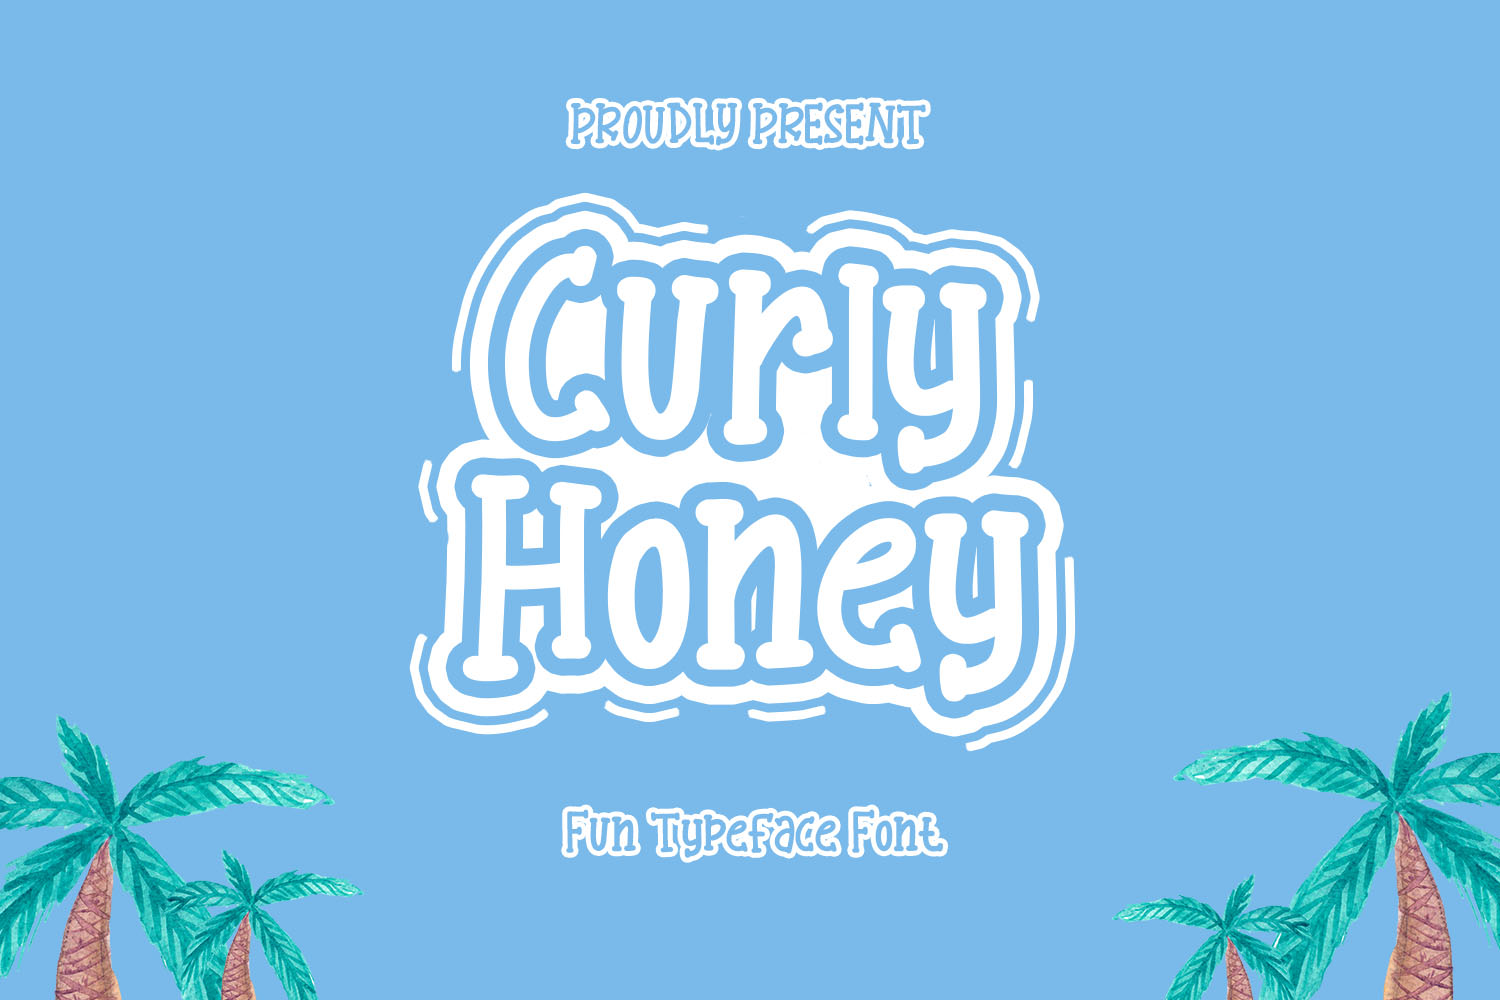 Curly Honey